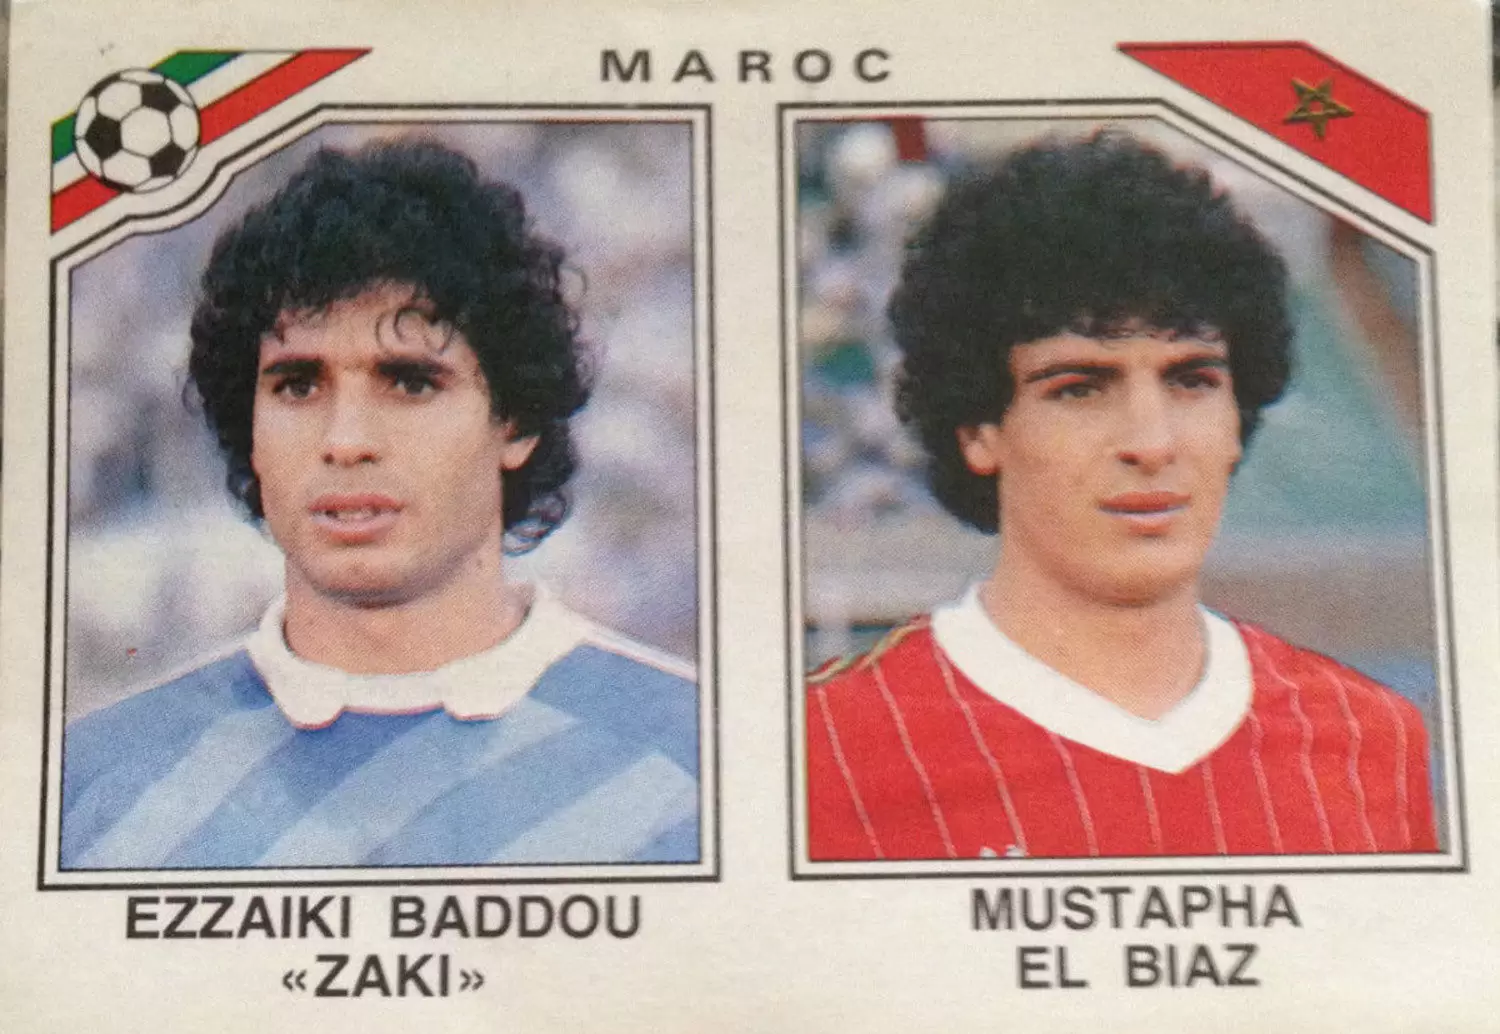 Mexico 86 World Cup - Ezzaiki Baddou / Mustapha El Biaz - Maroc